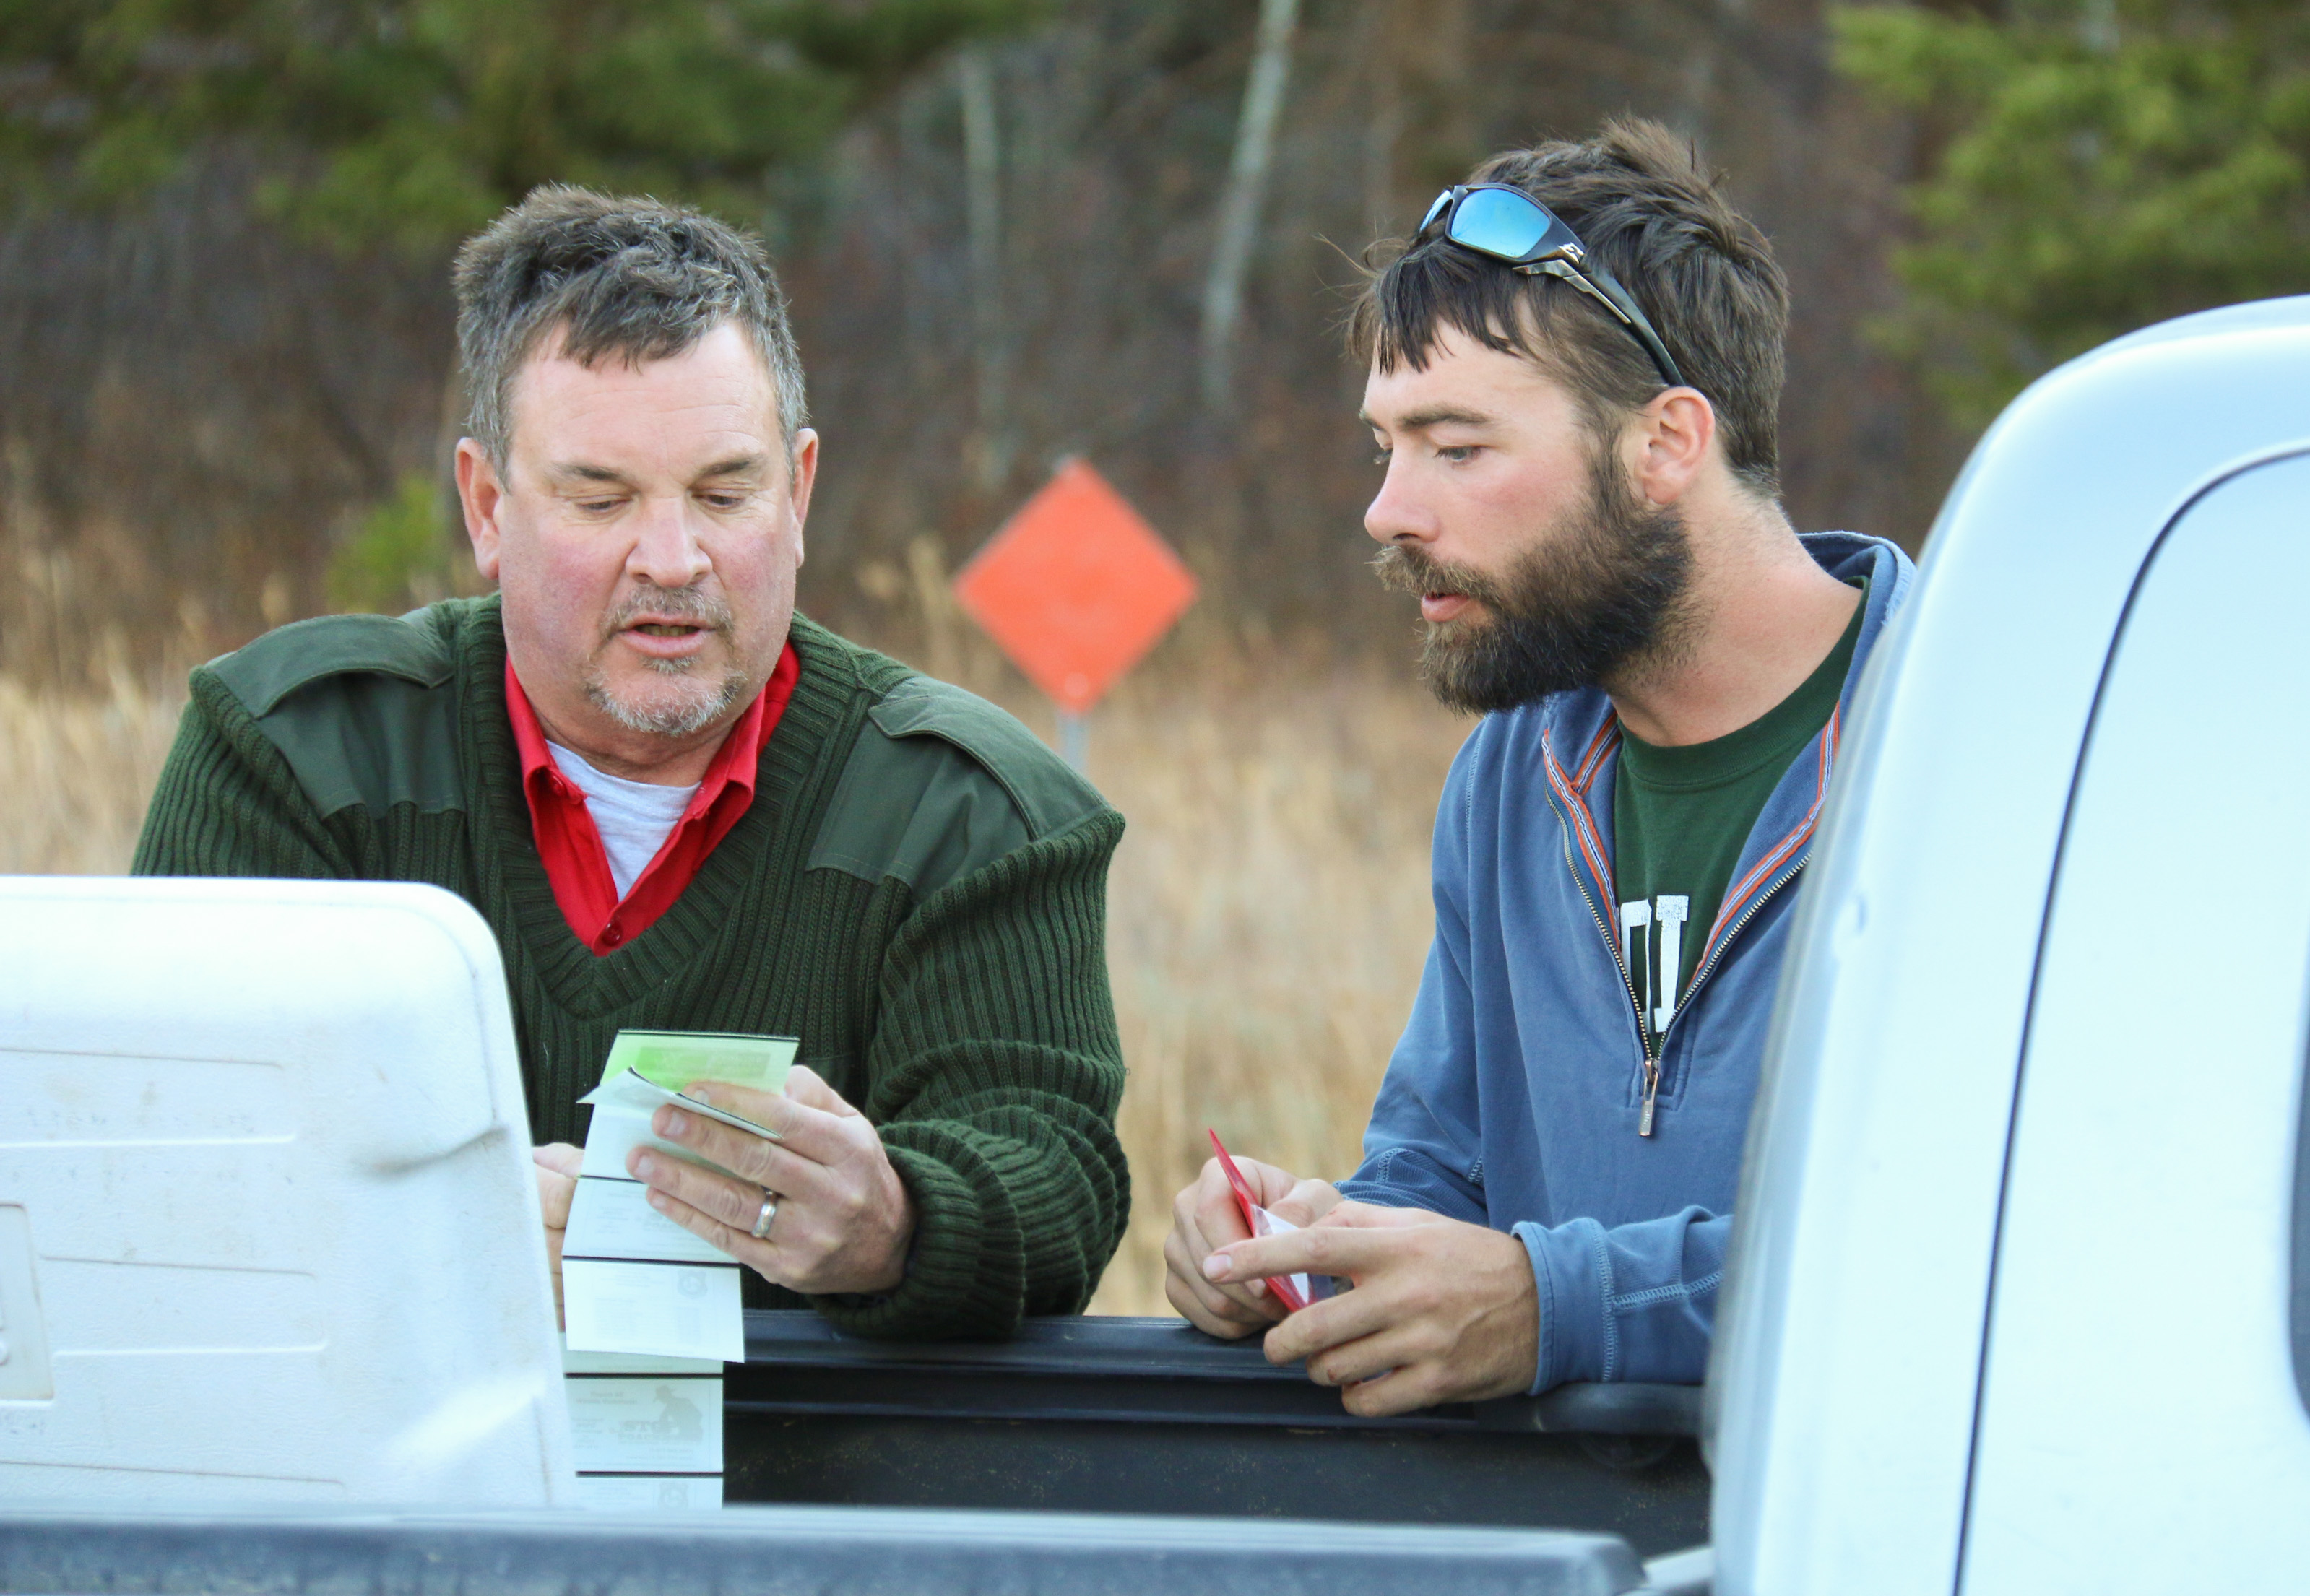 edberg talks with a hunter at a checkstation